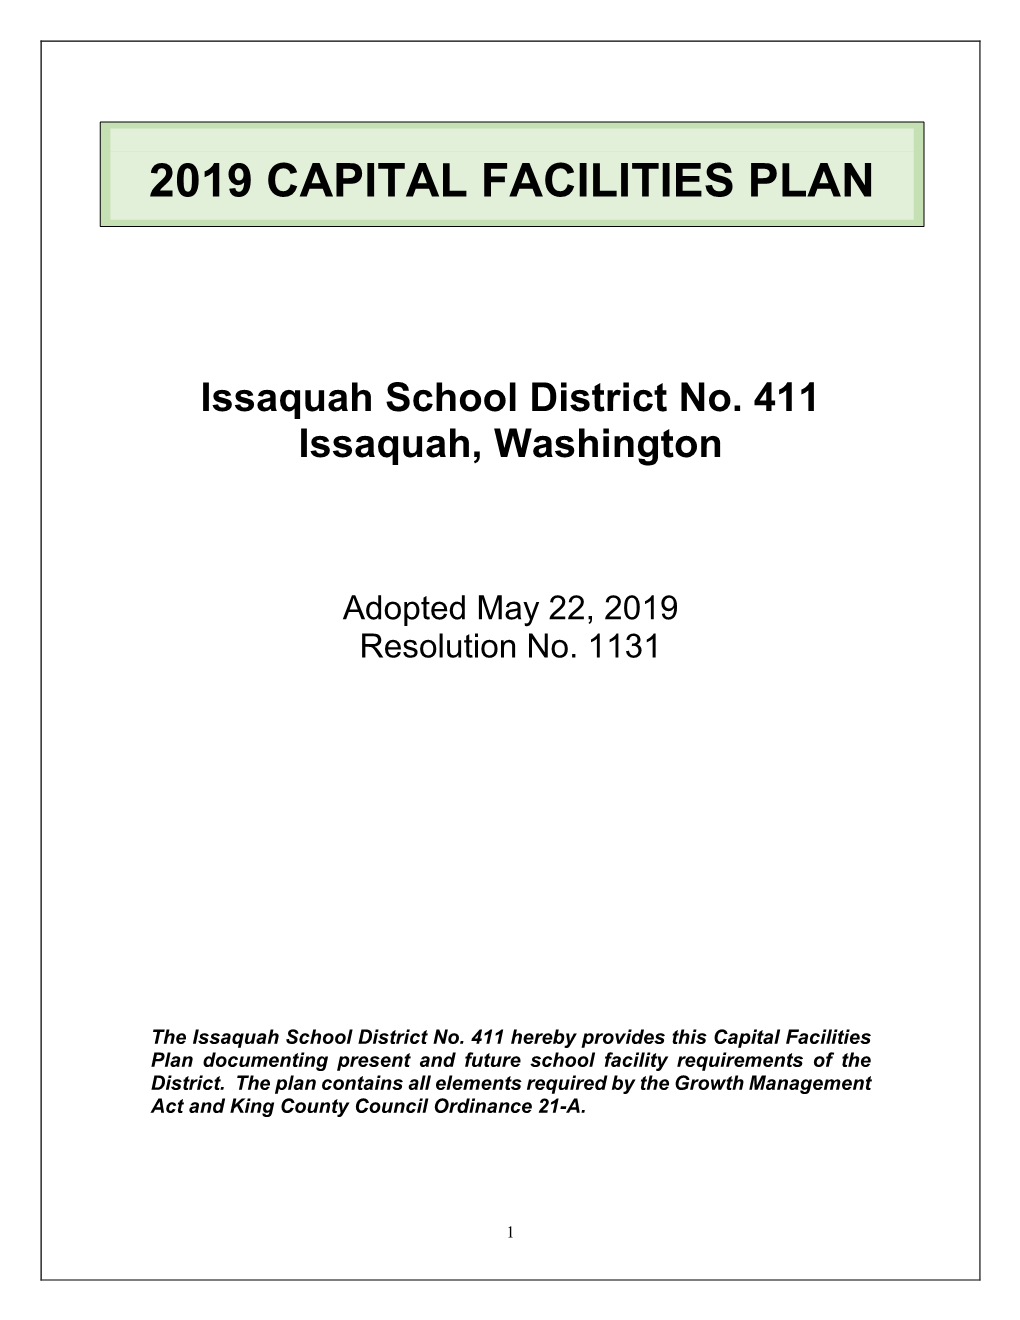 2019 Capital Facilities Plan